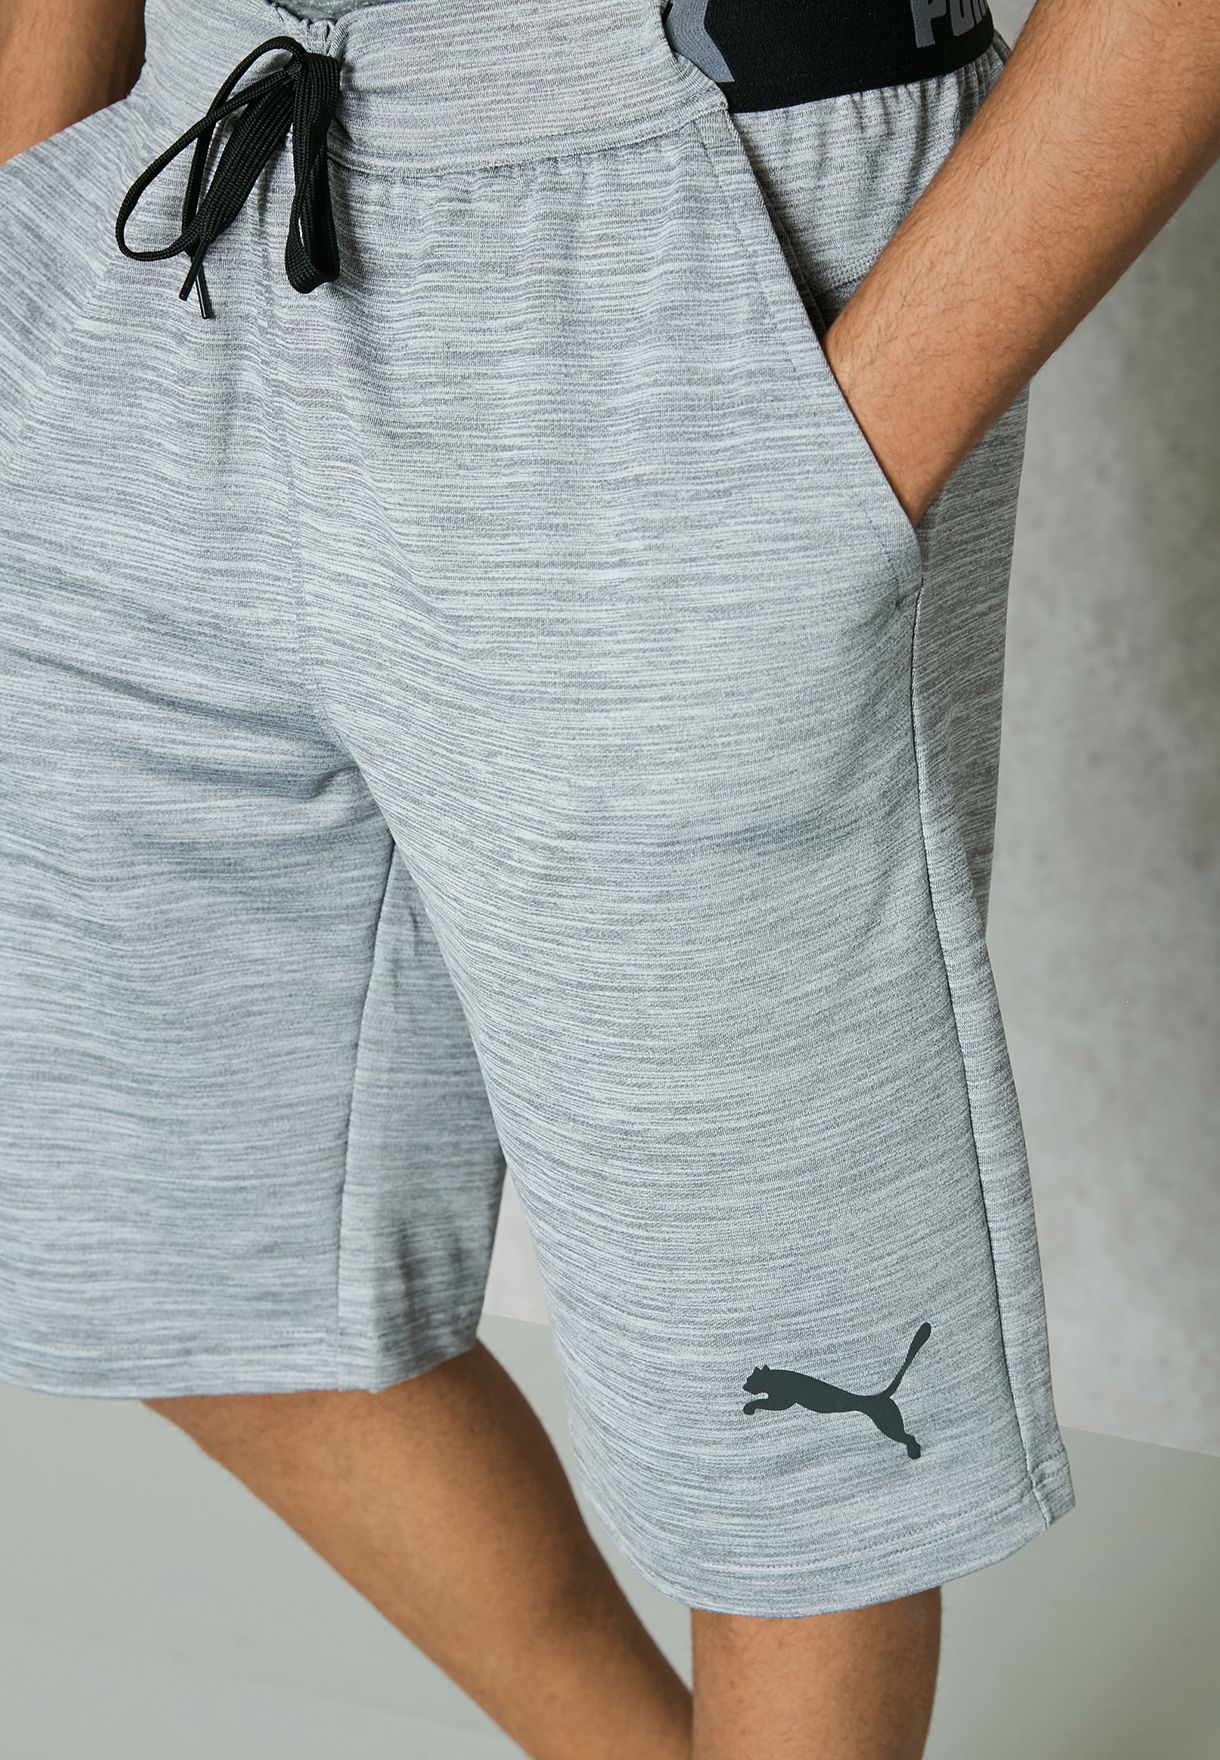 Tech Fleece Shorts - Discount Store